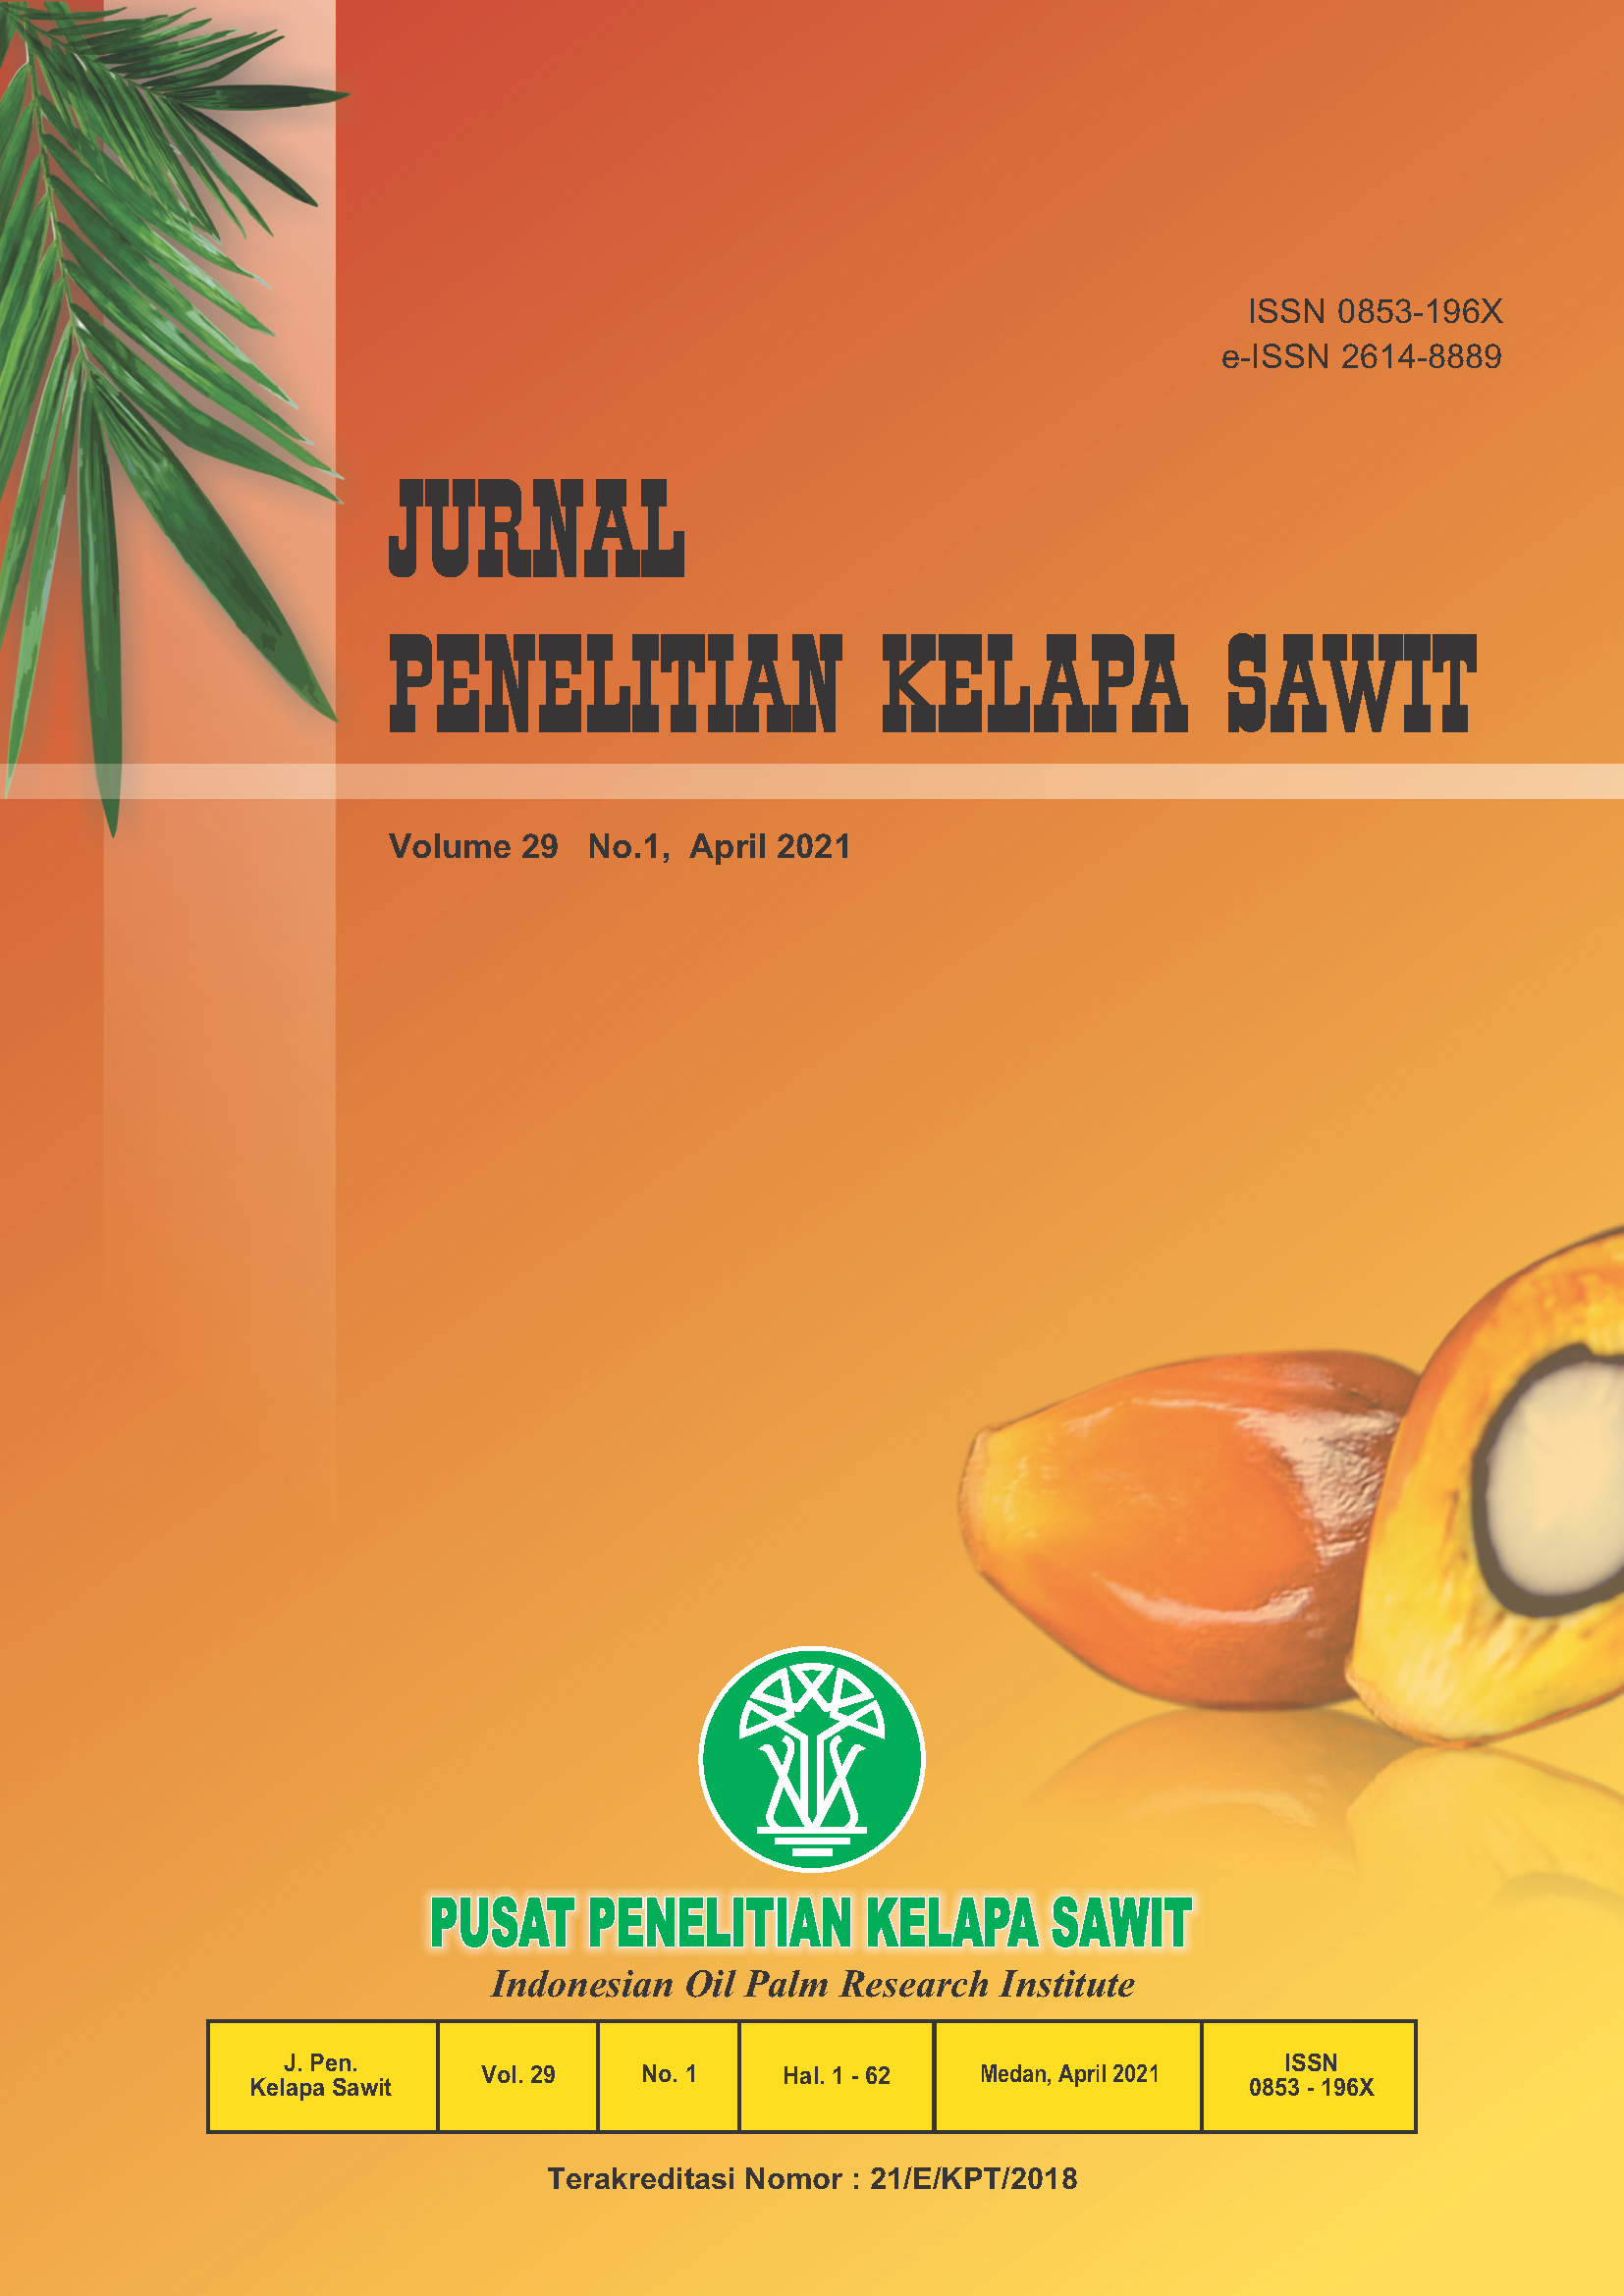 #kelapa sawit #ppks #iopri #oil palm